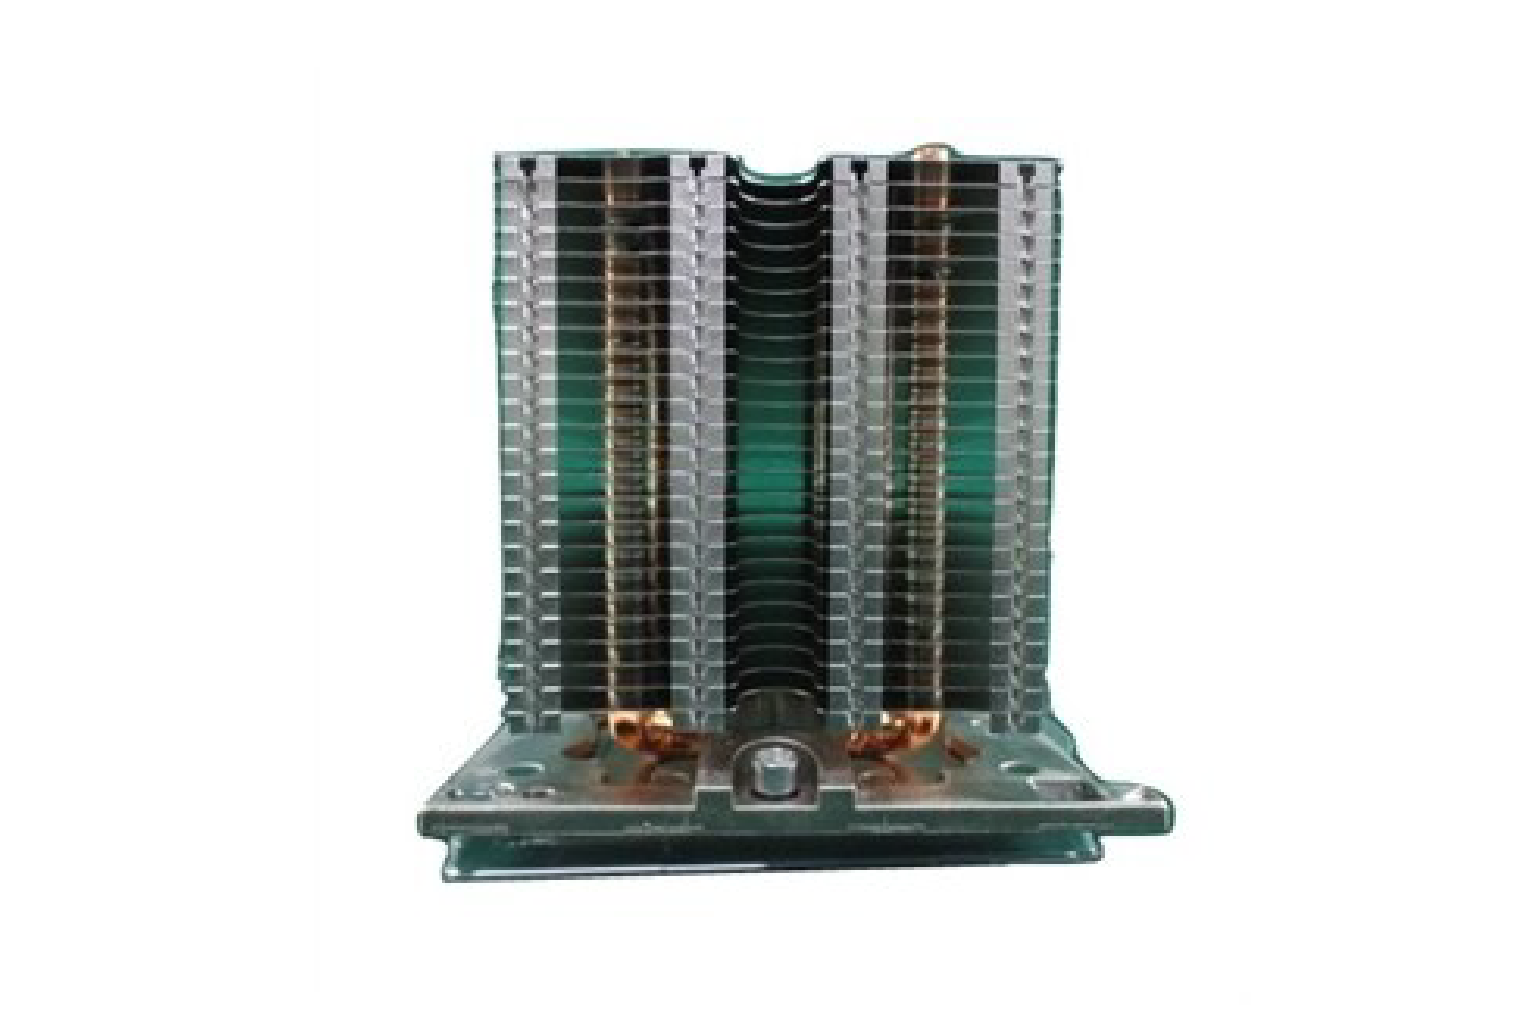 Kit heatsink for CPU2 Dell Poweredge T640 (Gồm 3 fan)